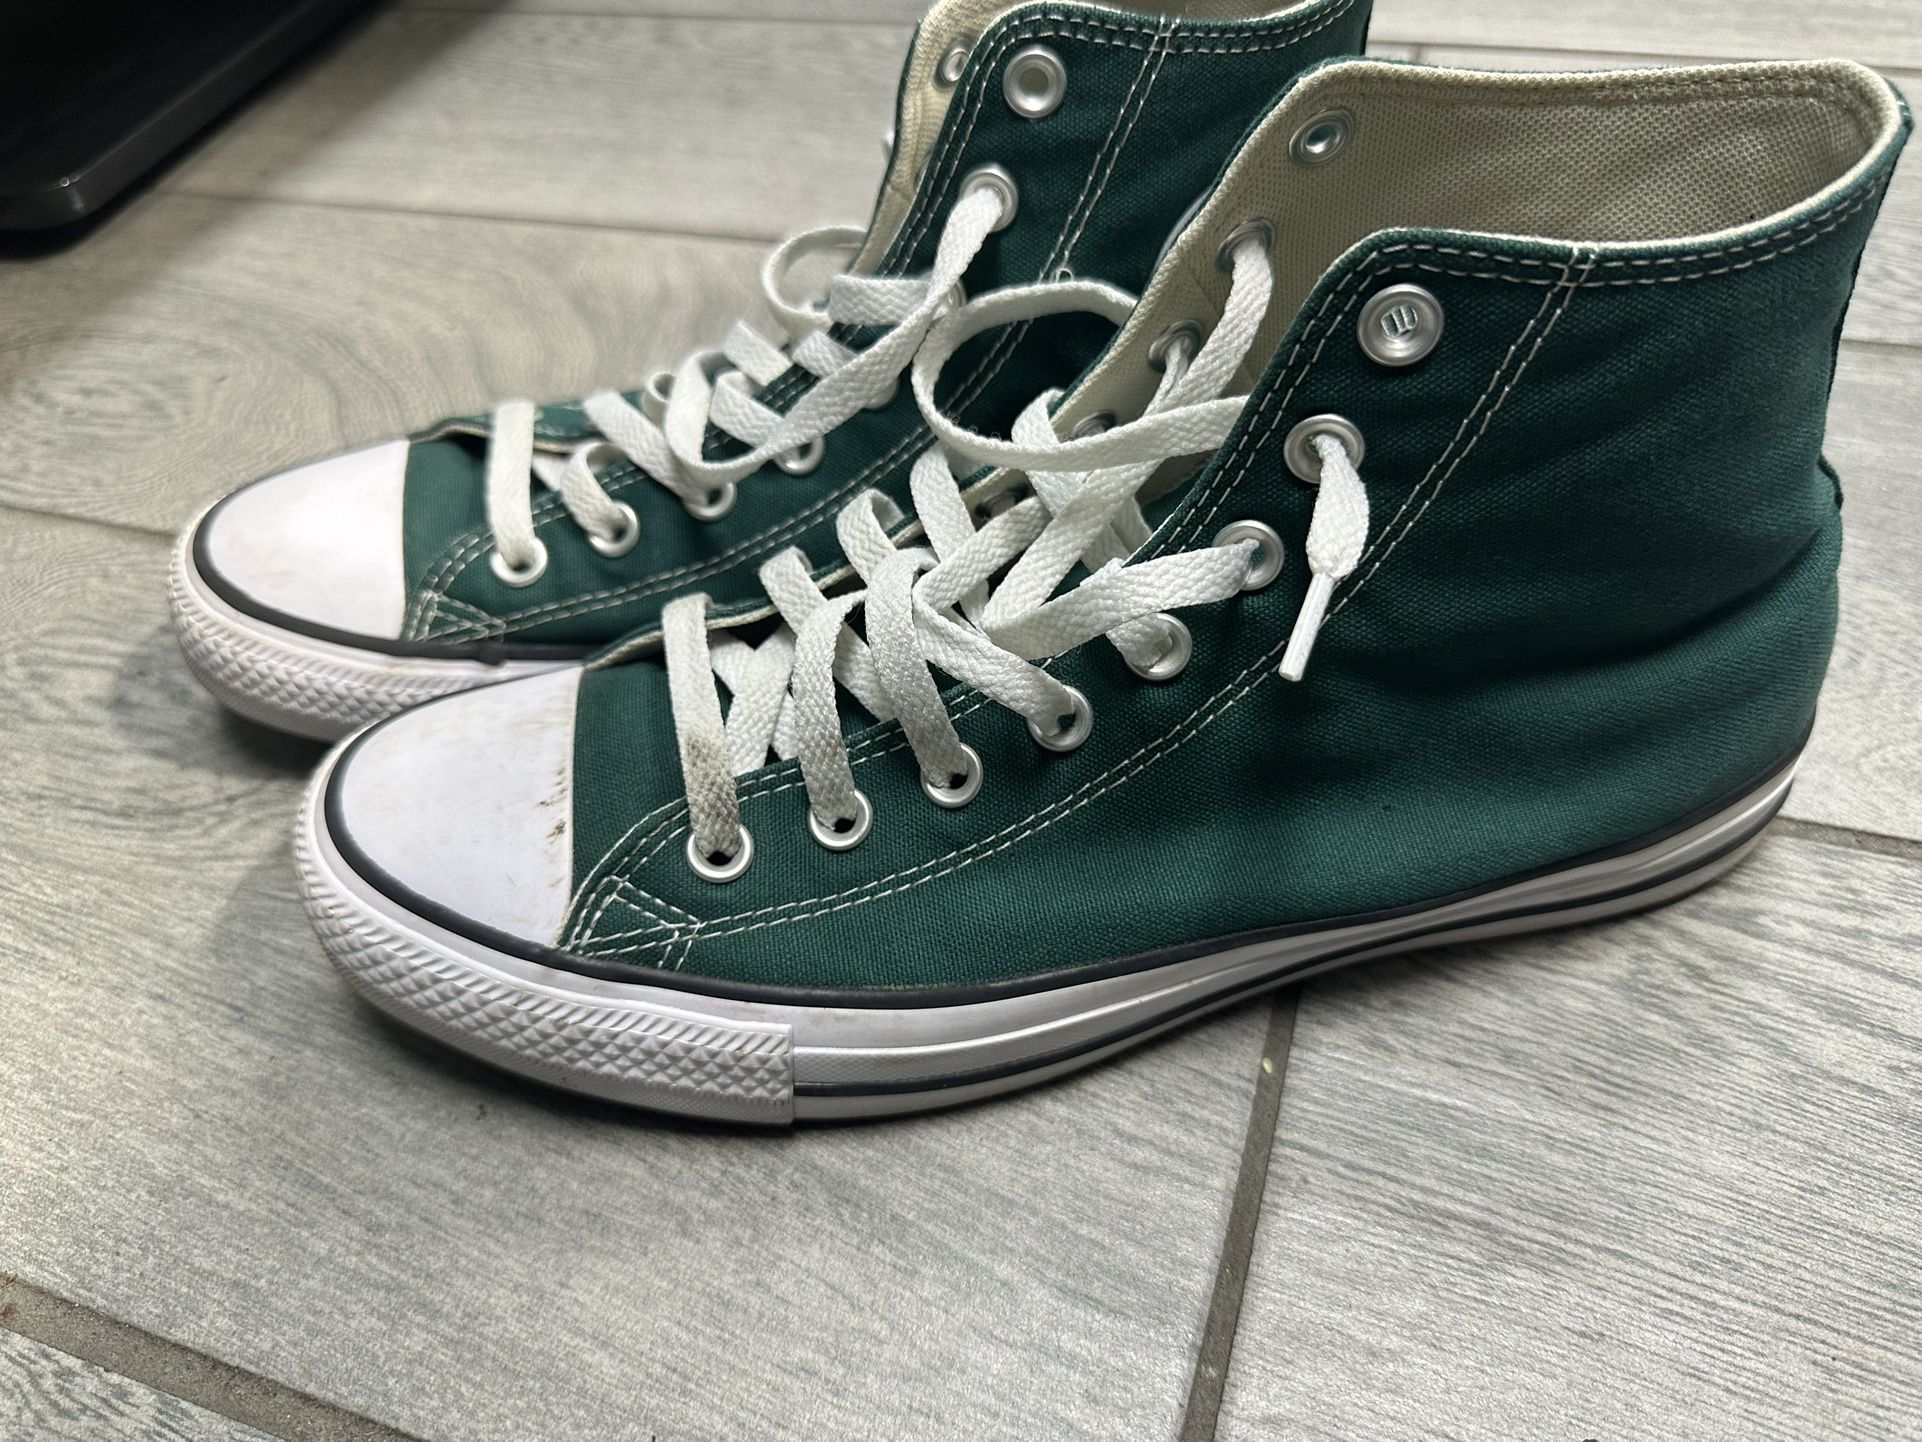 Green Converse 